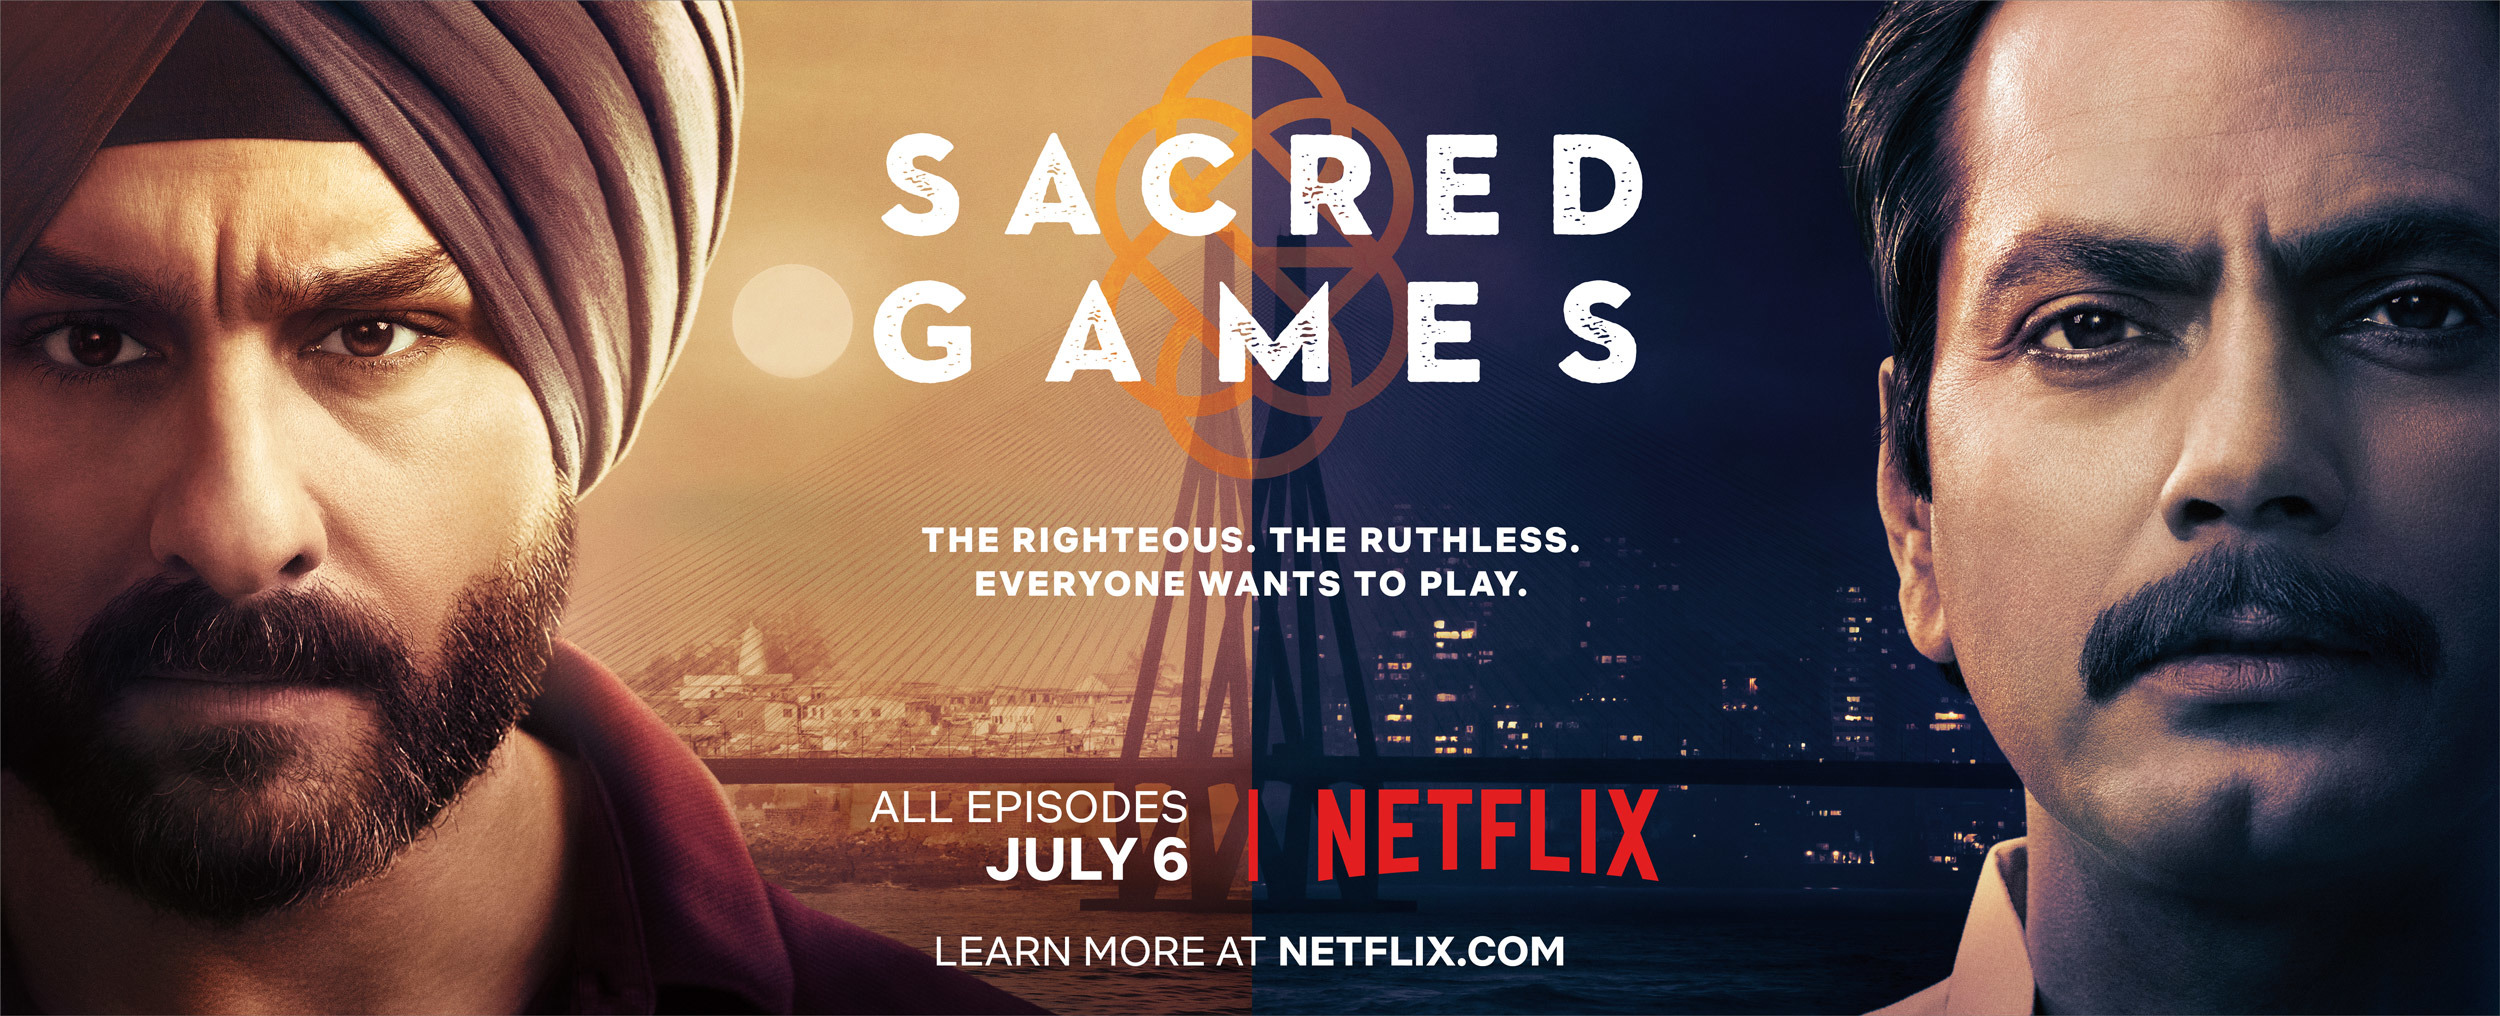 Mega Sized TV Poster Image for Sacred Games (#7 of 20)